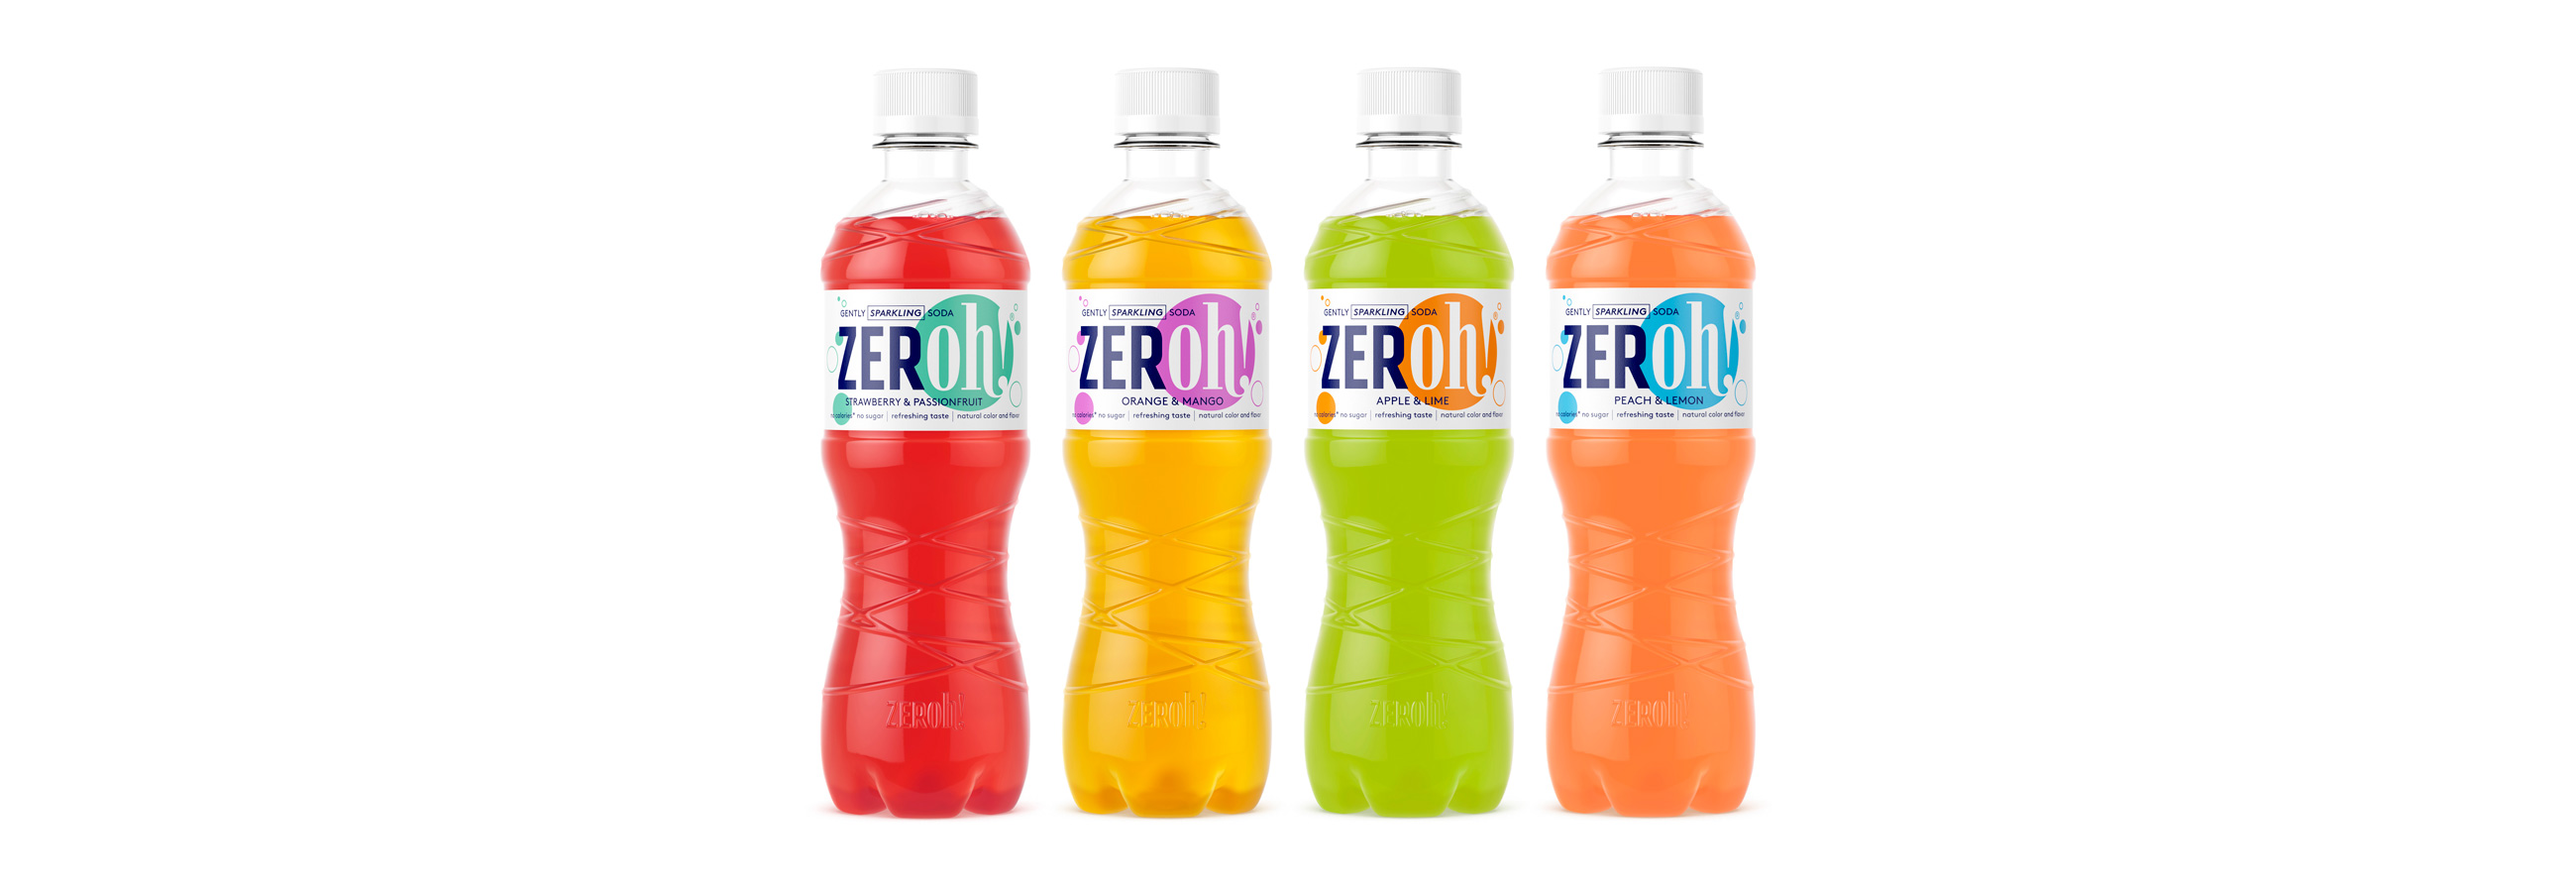 Lerum Zeroh saft utvalg range. Emballasje packaging design.